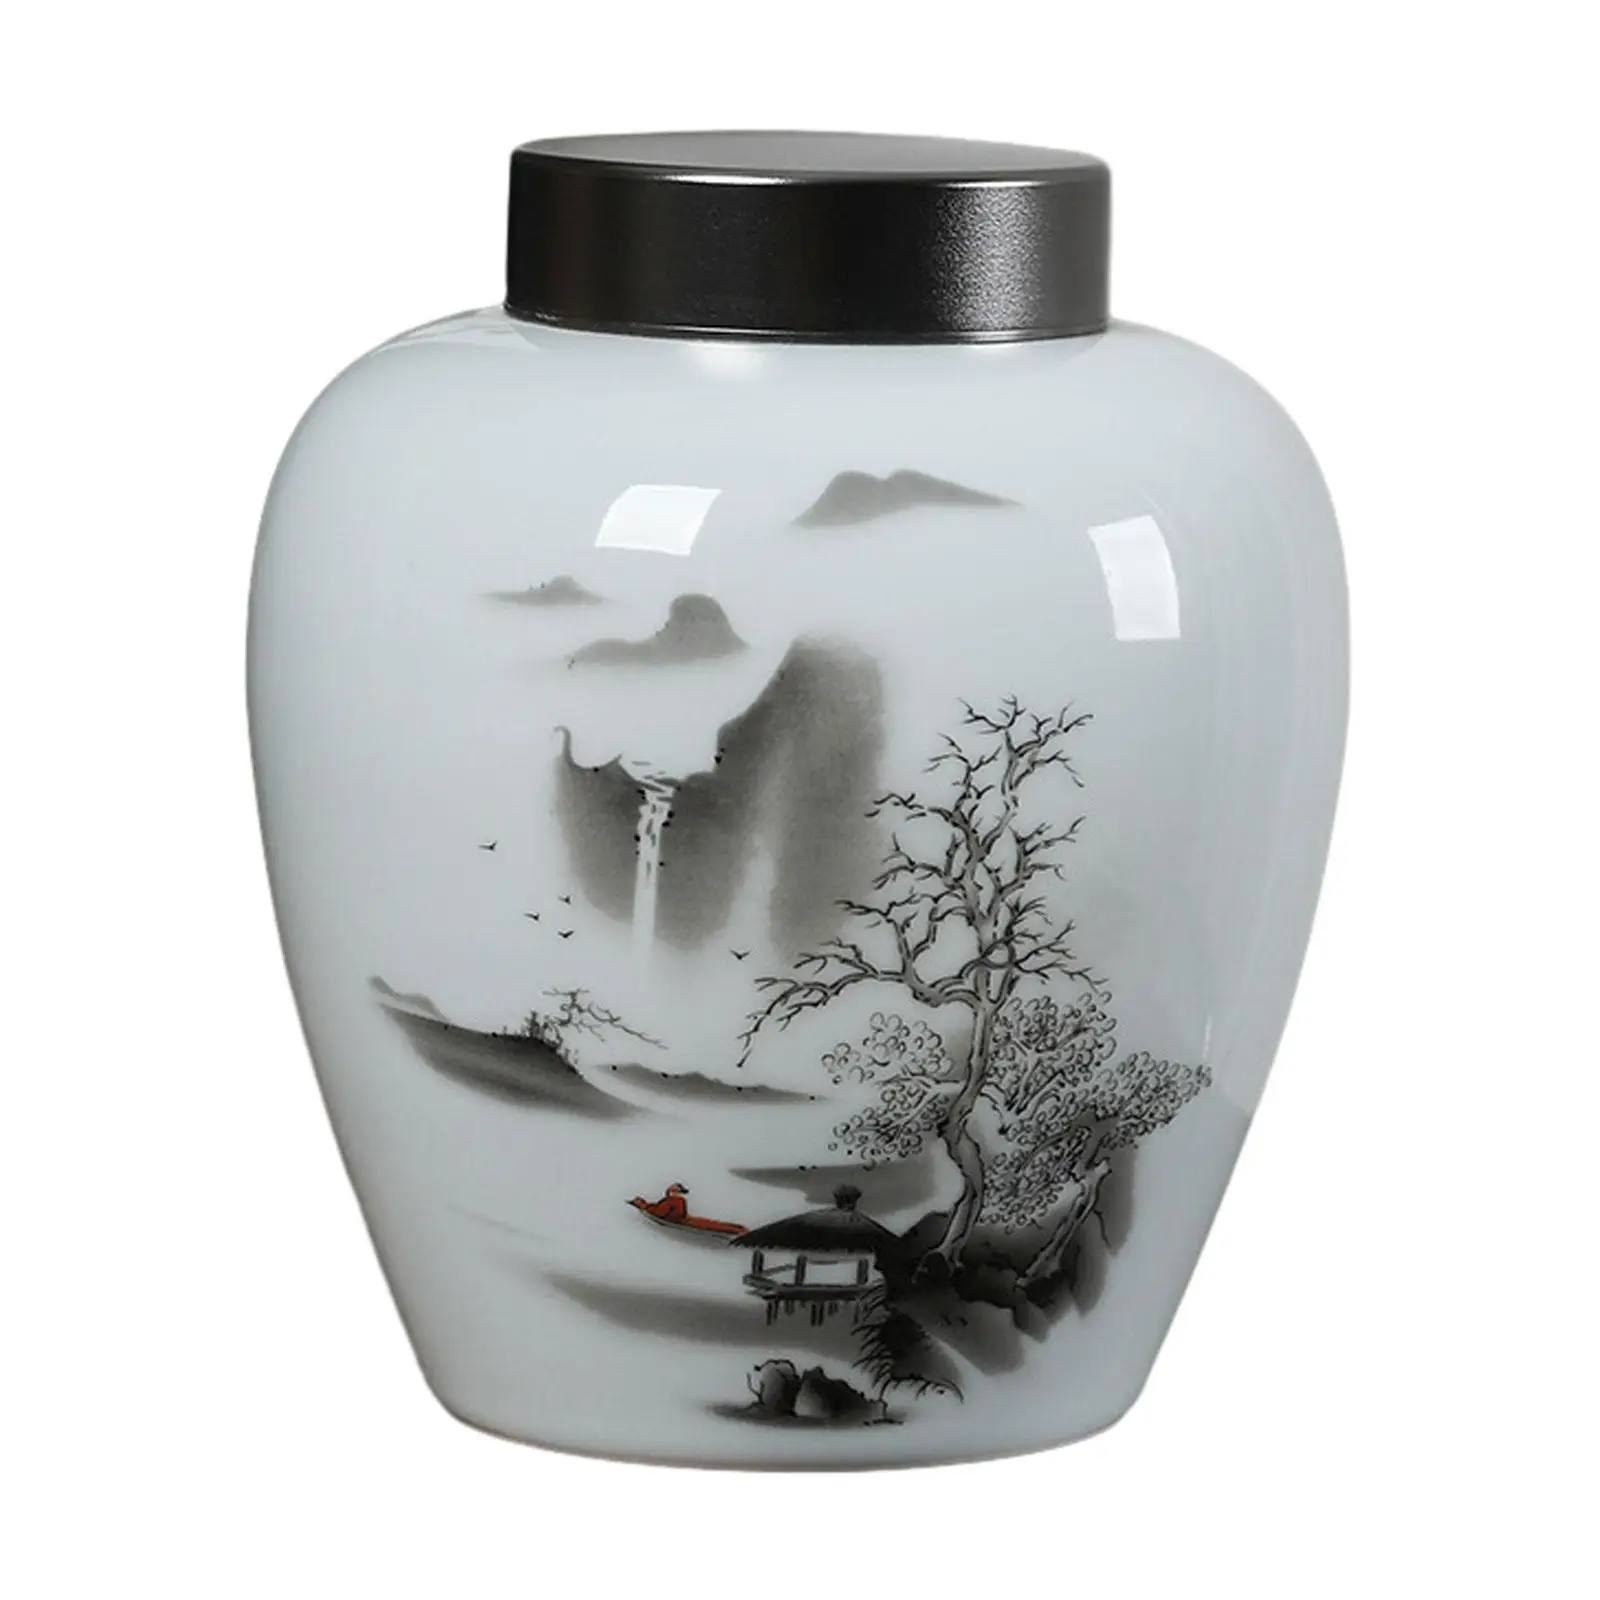 Ceramic Ginger Jar Chinese Flower Display Organizer Porcelain Tea Canister Tea Storage for Home Bedroom Table Office Decor